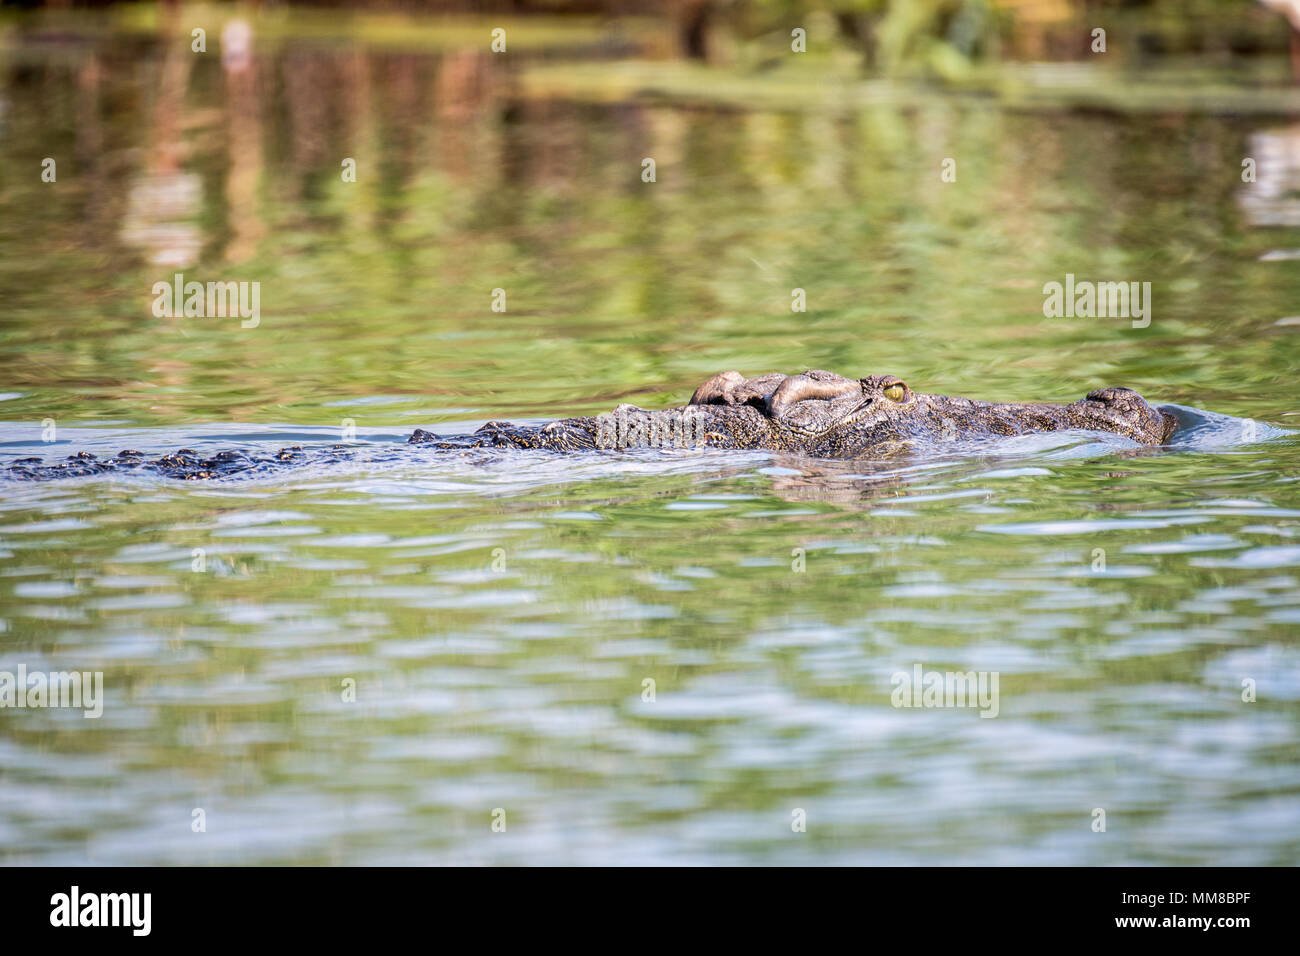 A Nile crocodile swims past, nearly fully camoflagued beneath the water of the Chobe River. Chobe National Park - Botswana Stock Photo